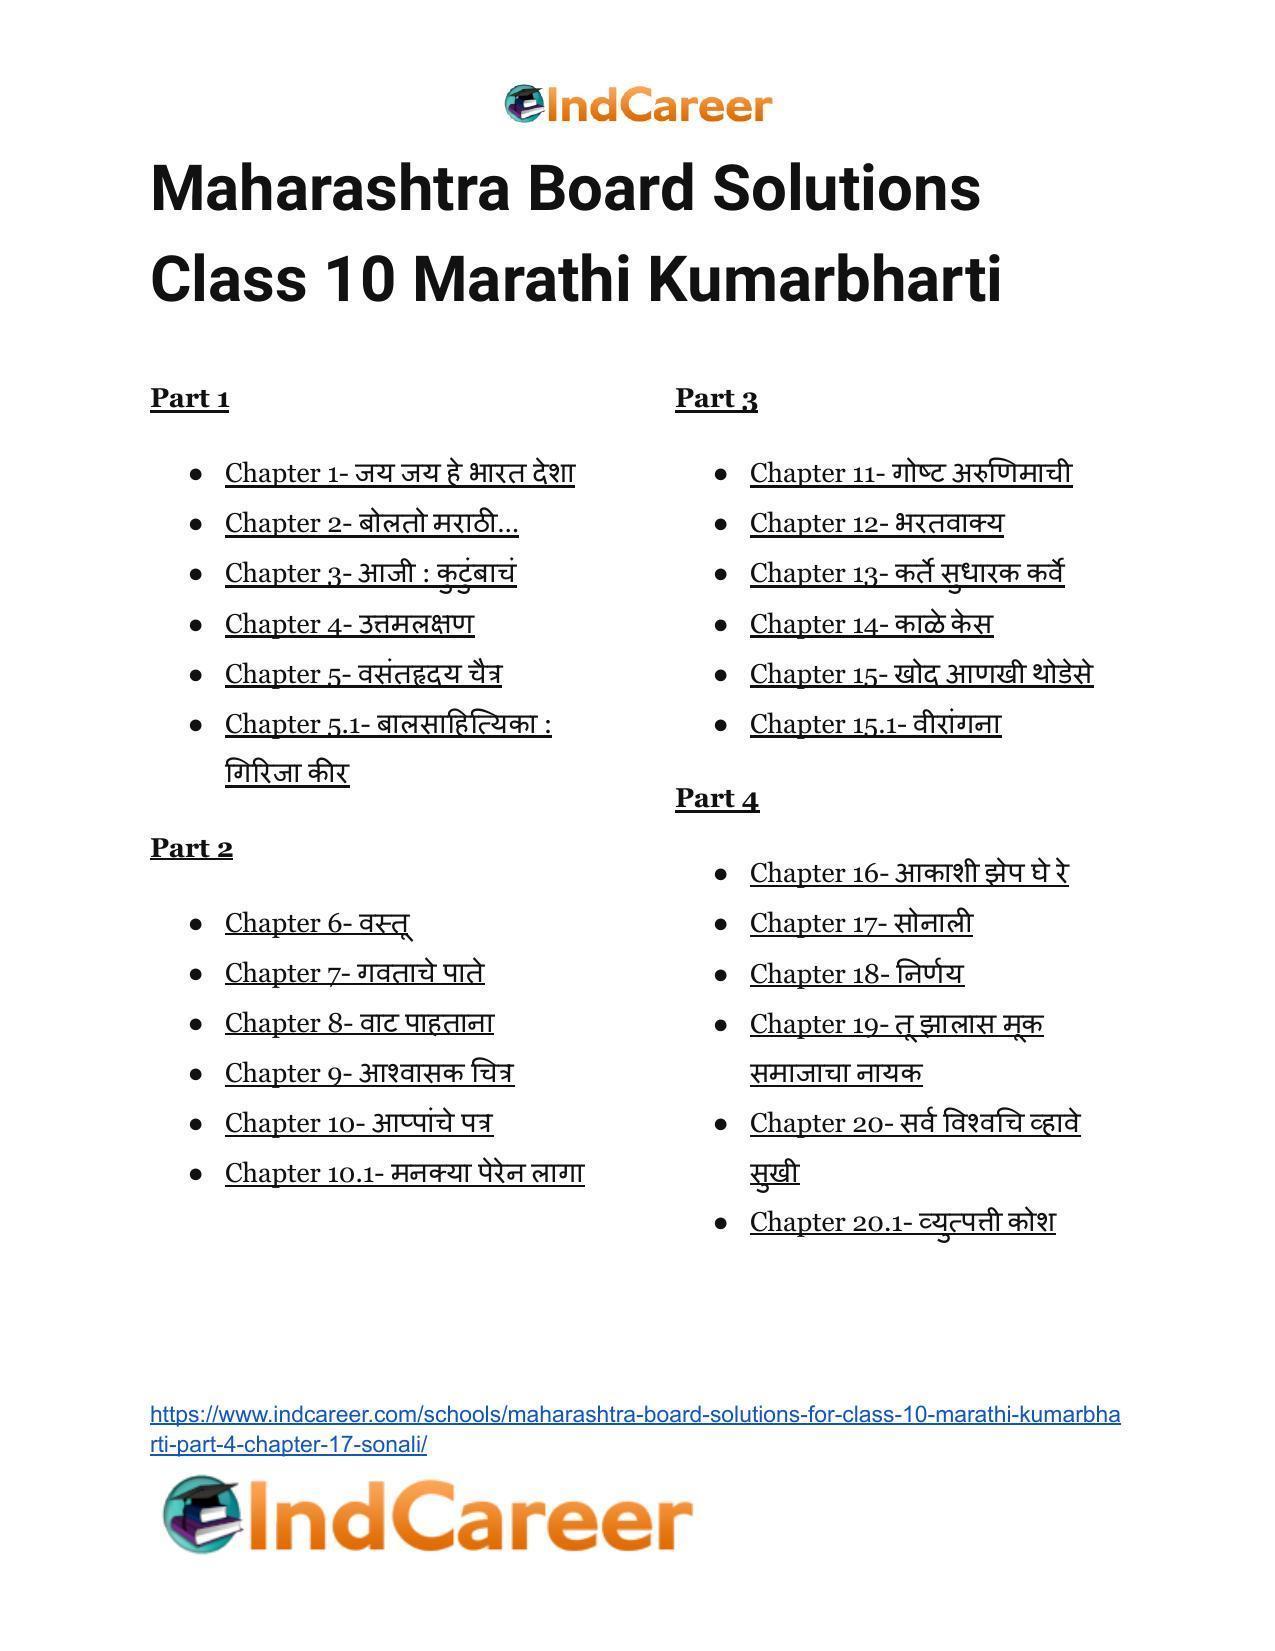 Maharashtra Board Solutions for Class 10- Marathi Kumarbharti (Part- 4): Chapter 17- सोनाली - Page 43